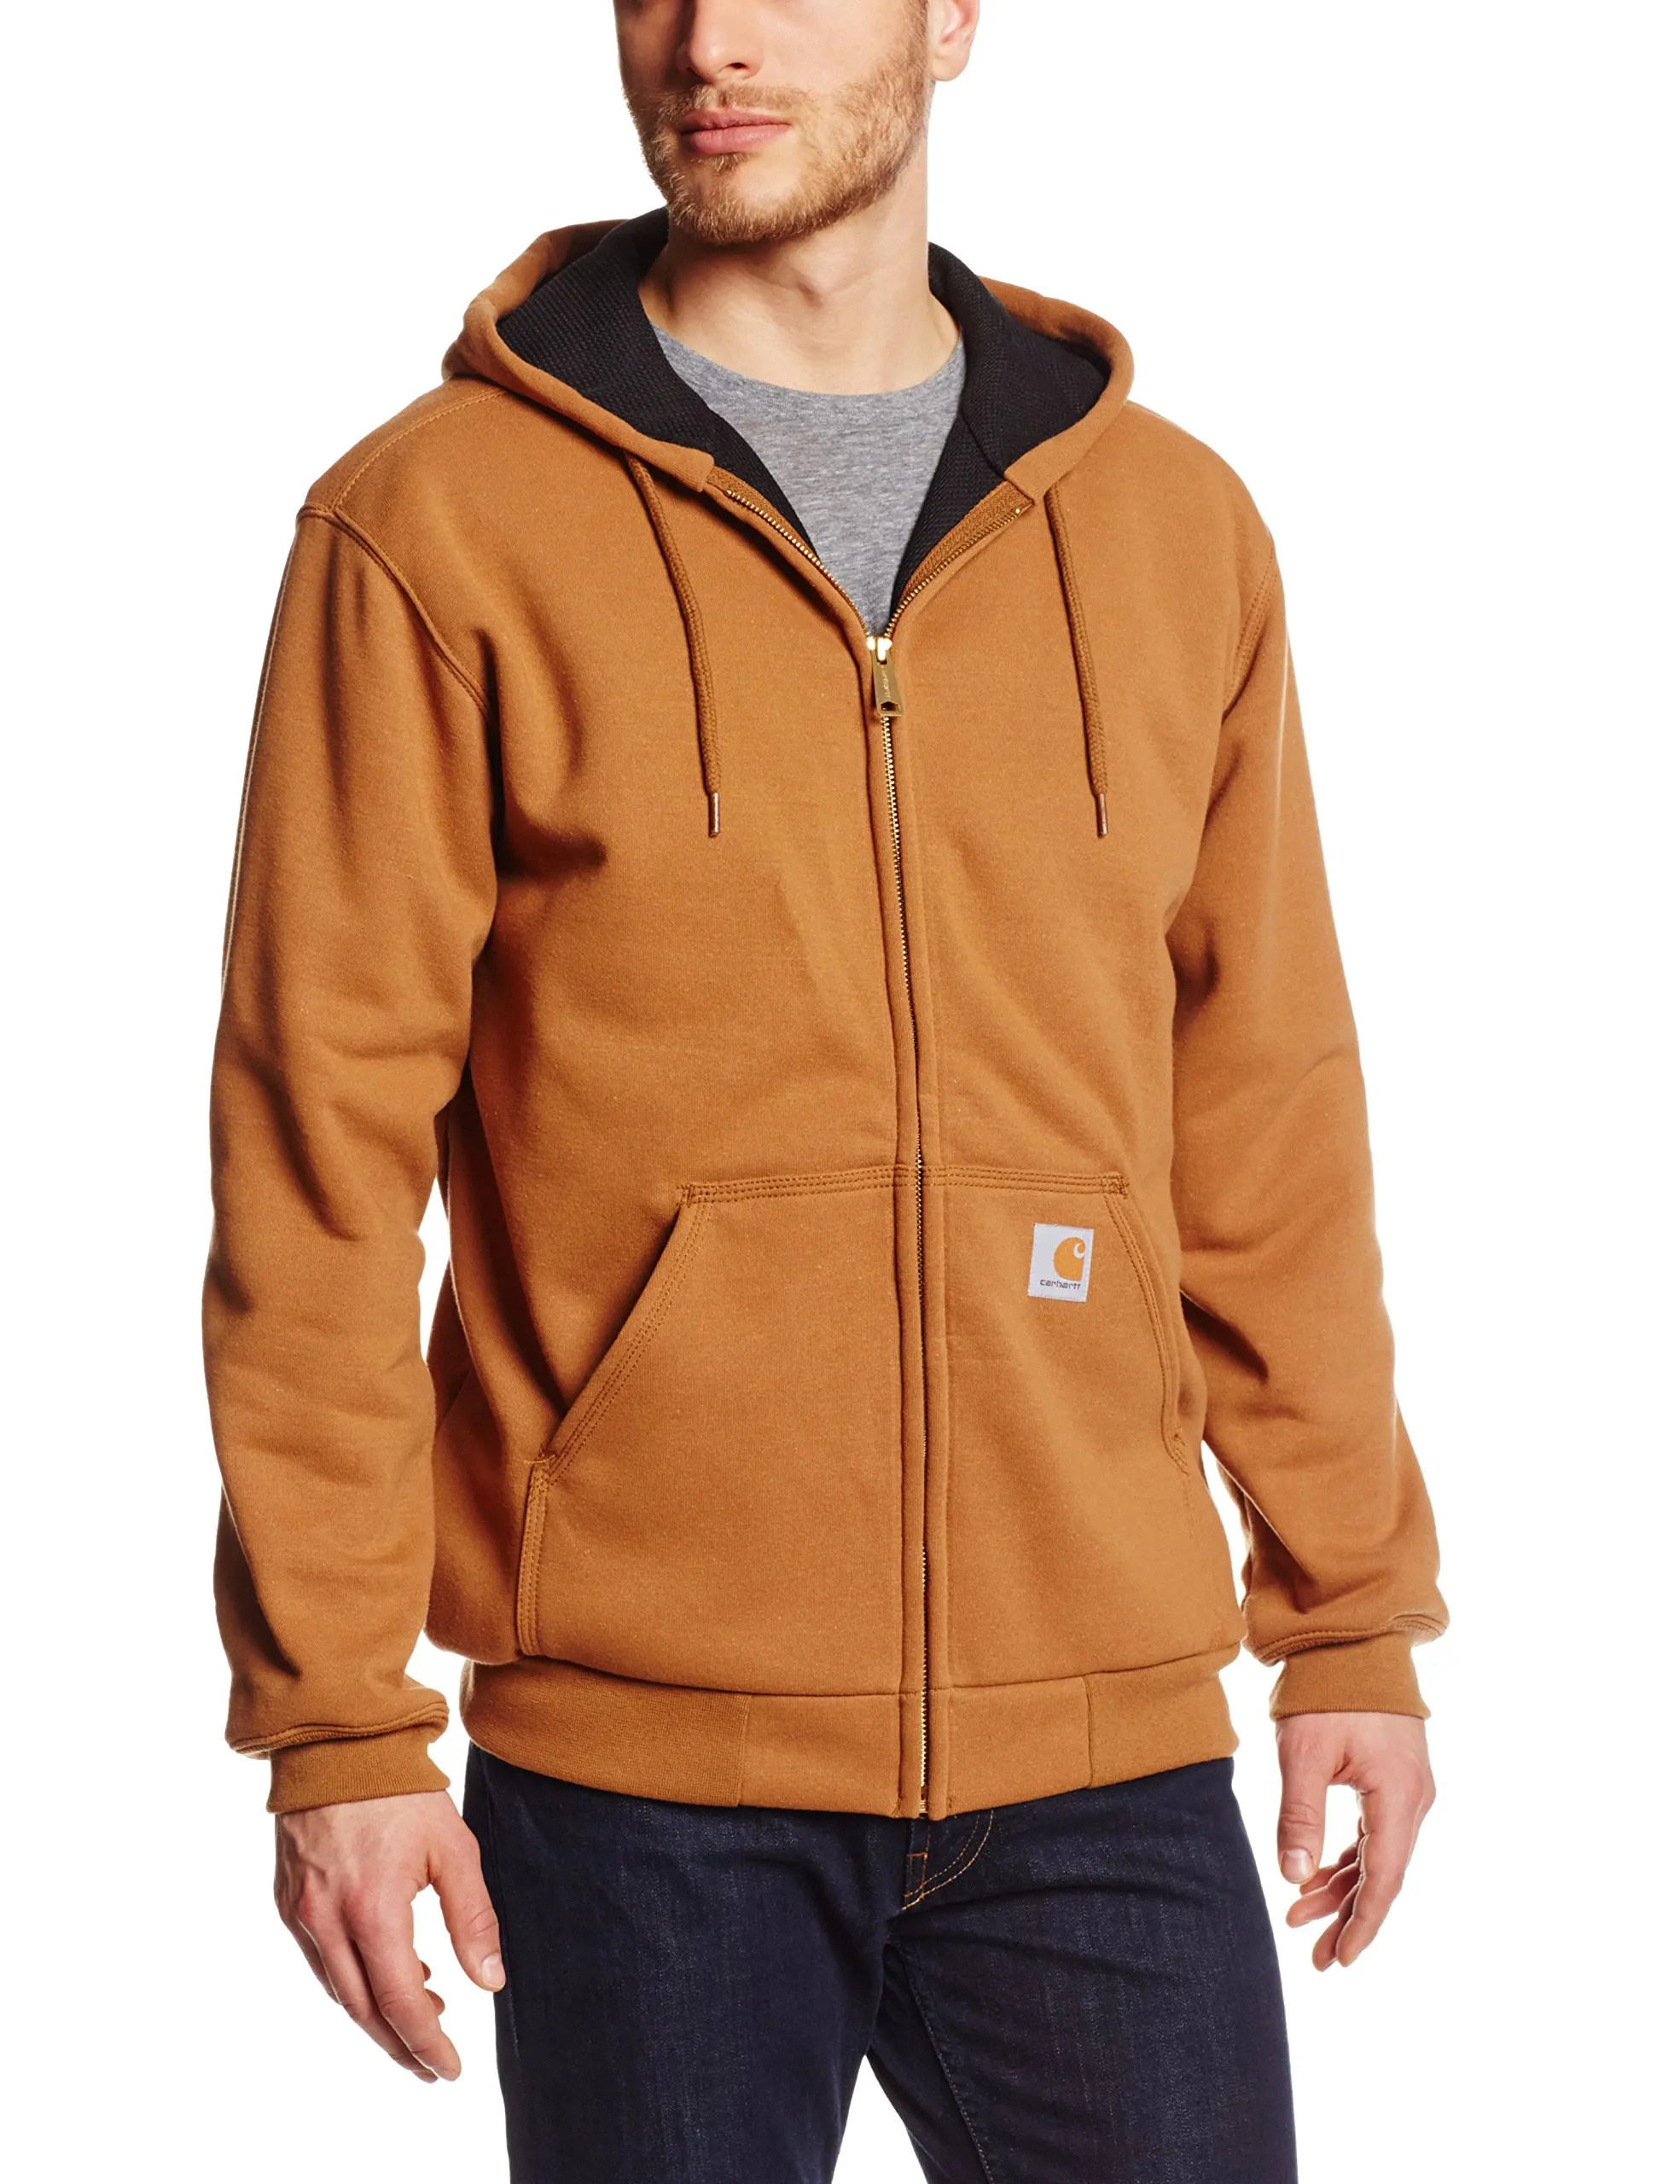 Details about   Carhartt Men's Rain Defender Rutland Thermal Lined Hooded Zip Front Sweatshirt